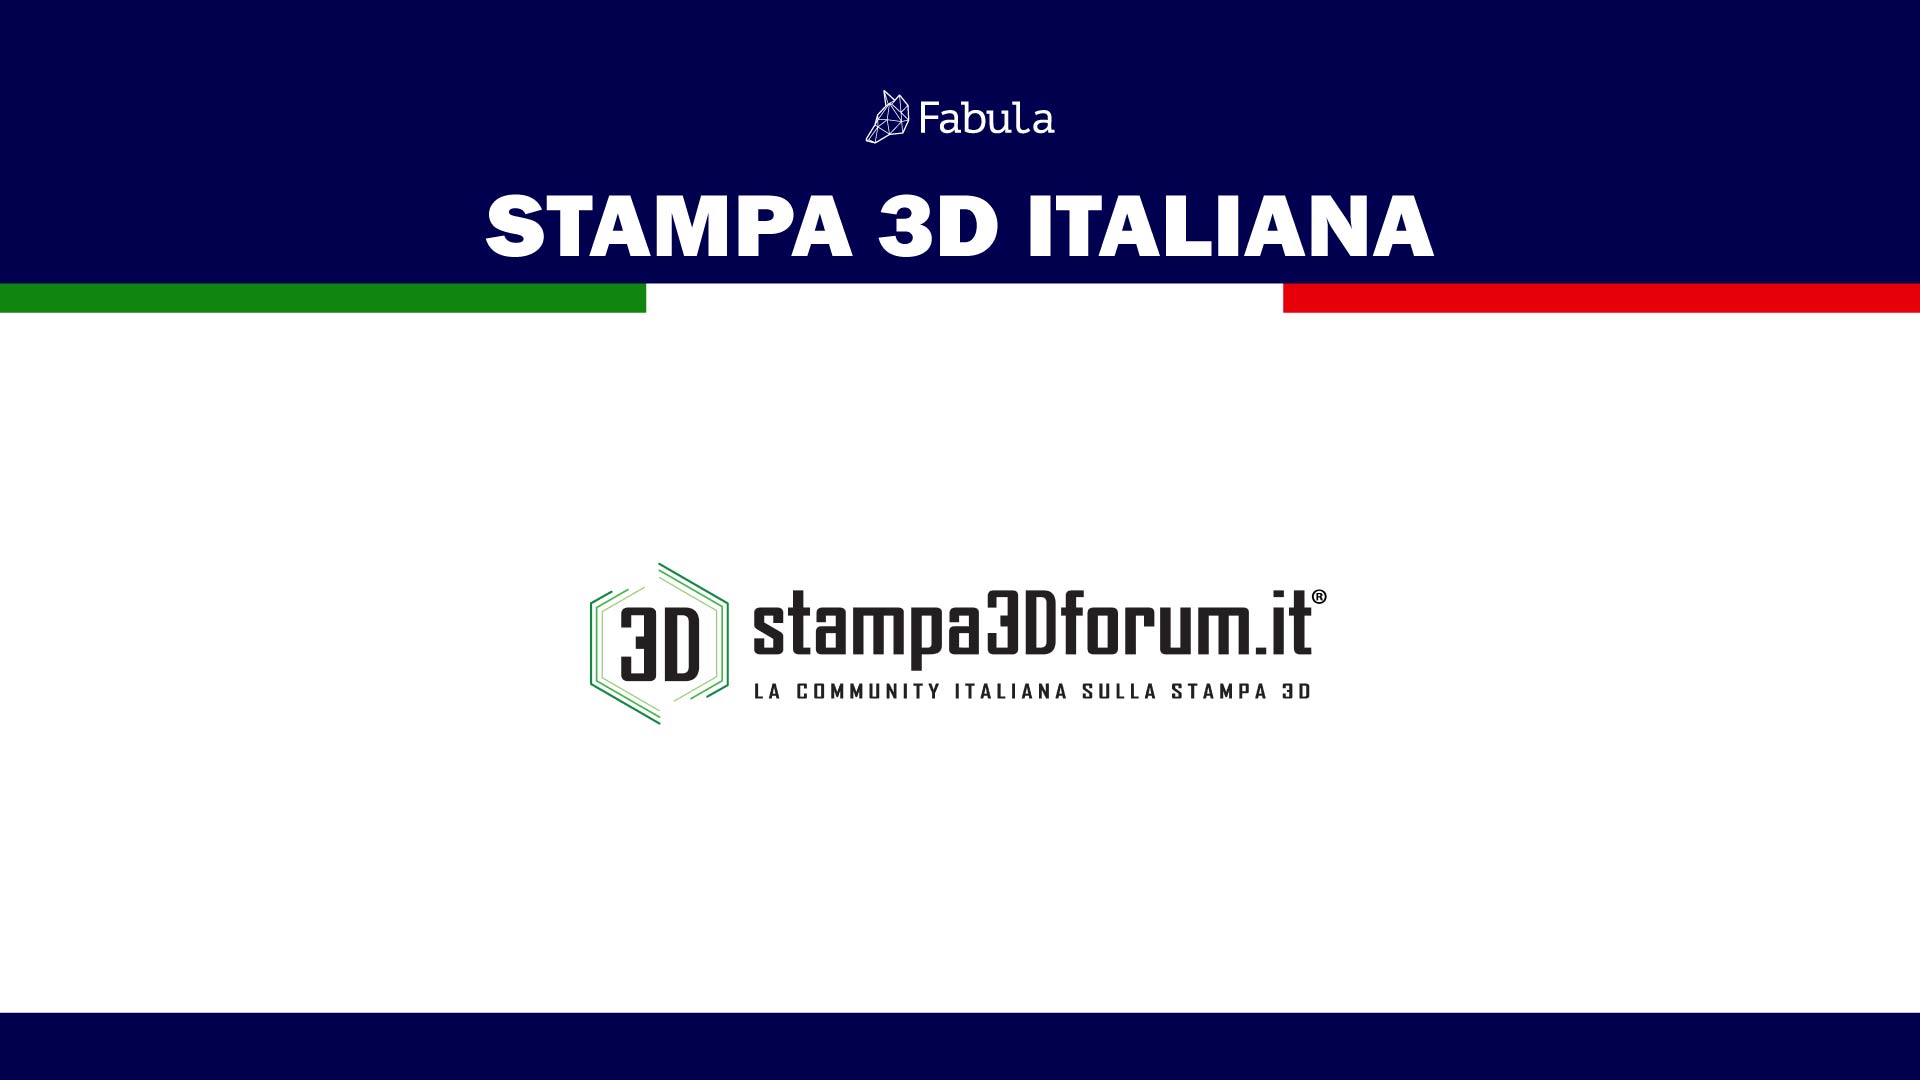 STAMPA 3D ITALIANA: Stampa 3D Forum by Alessandro Tassinari